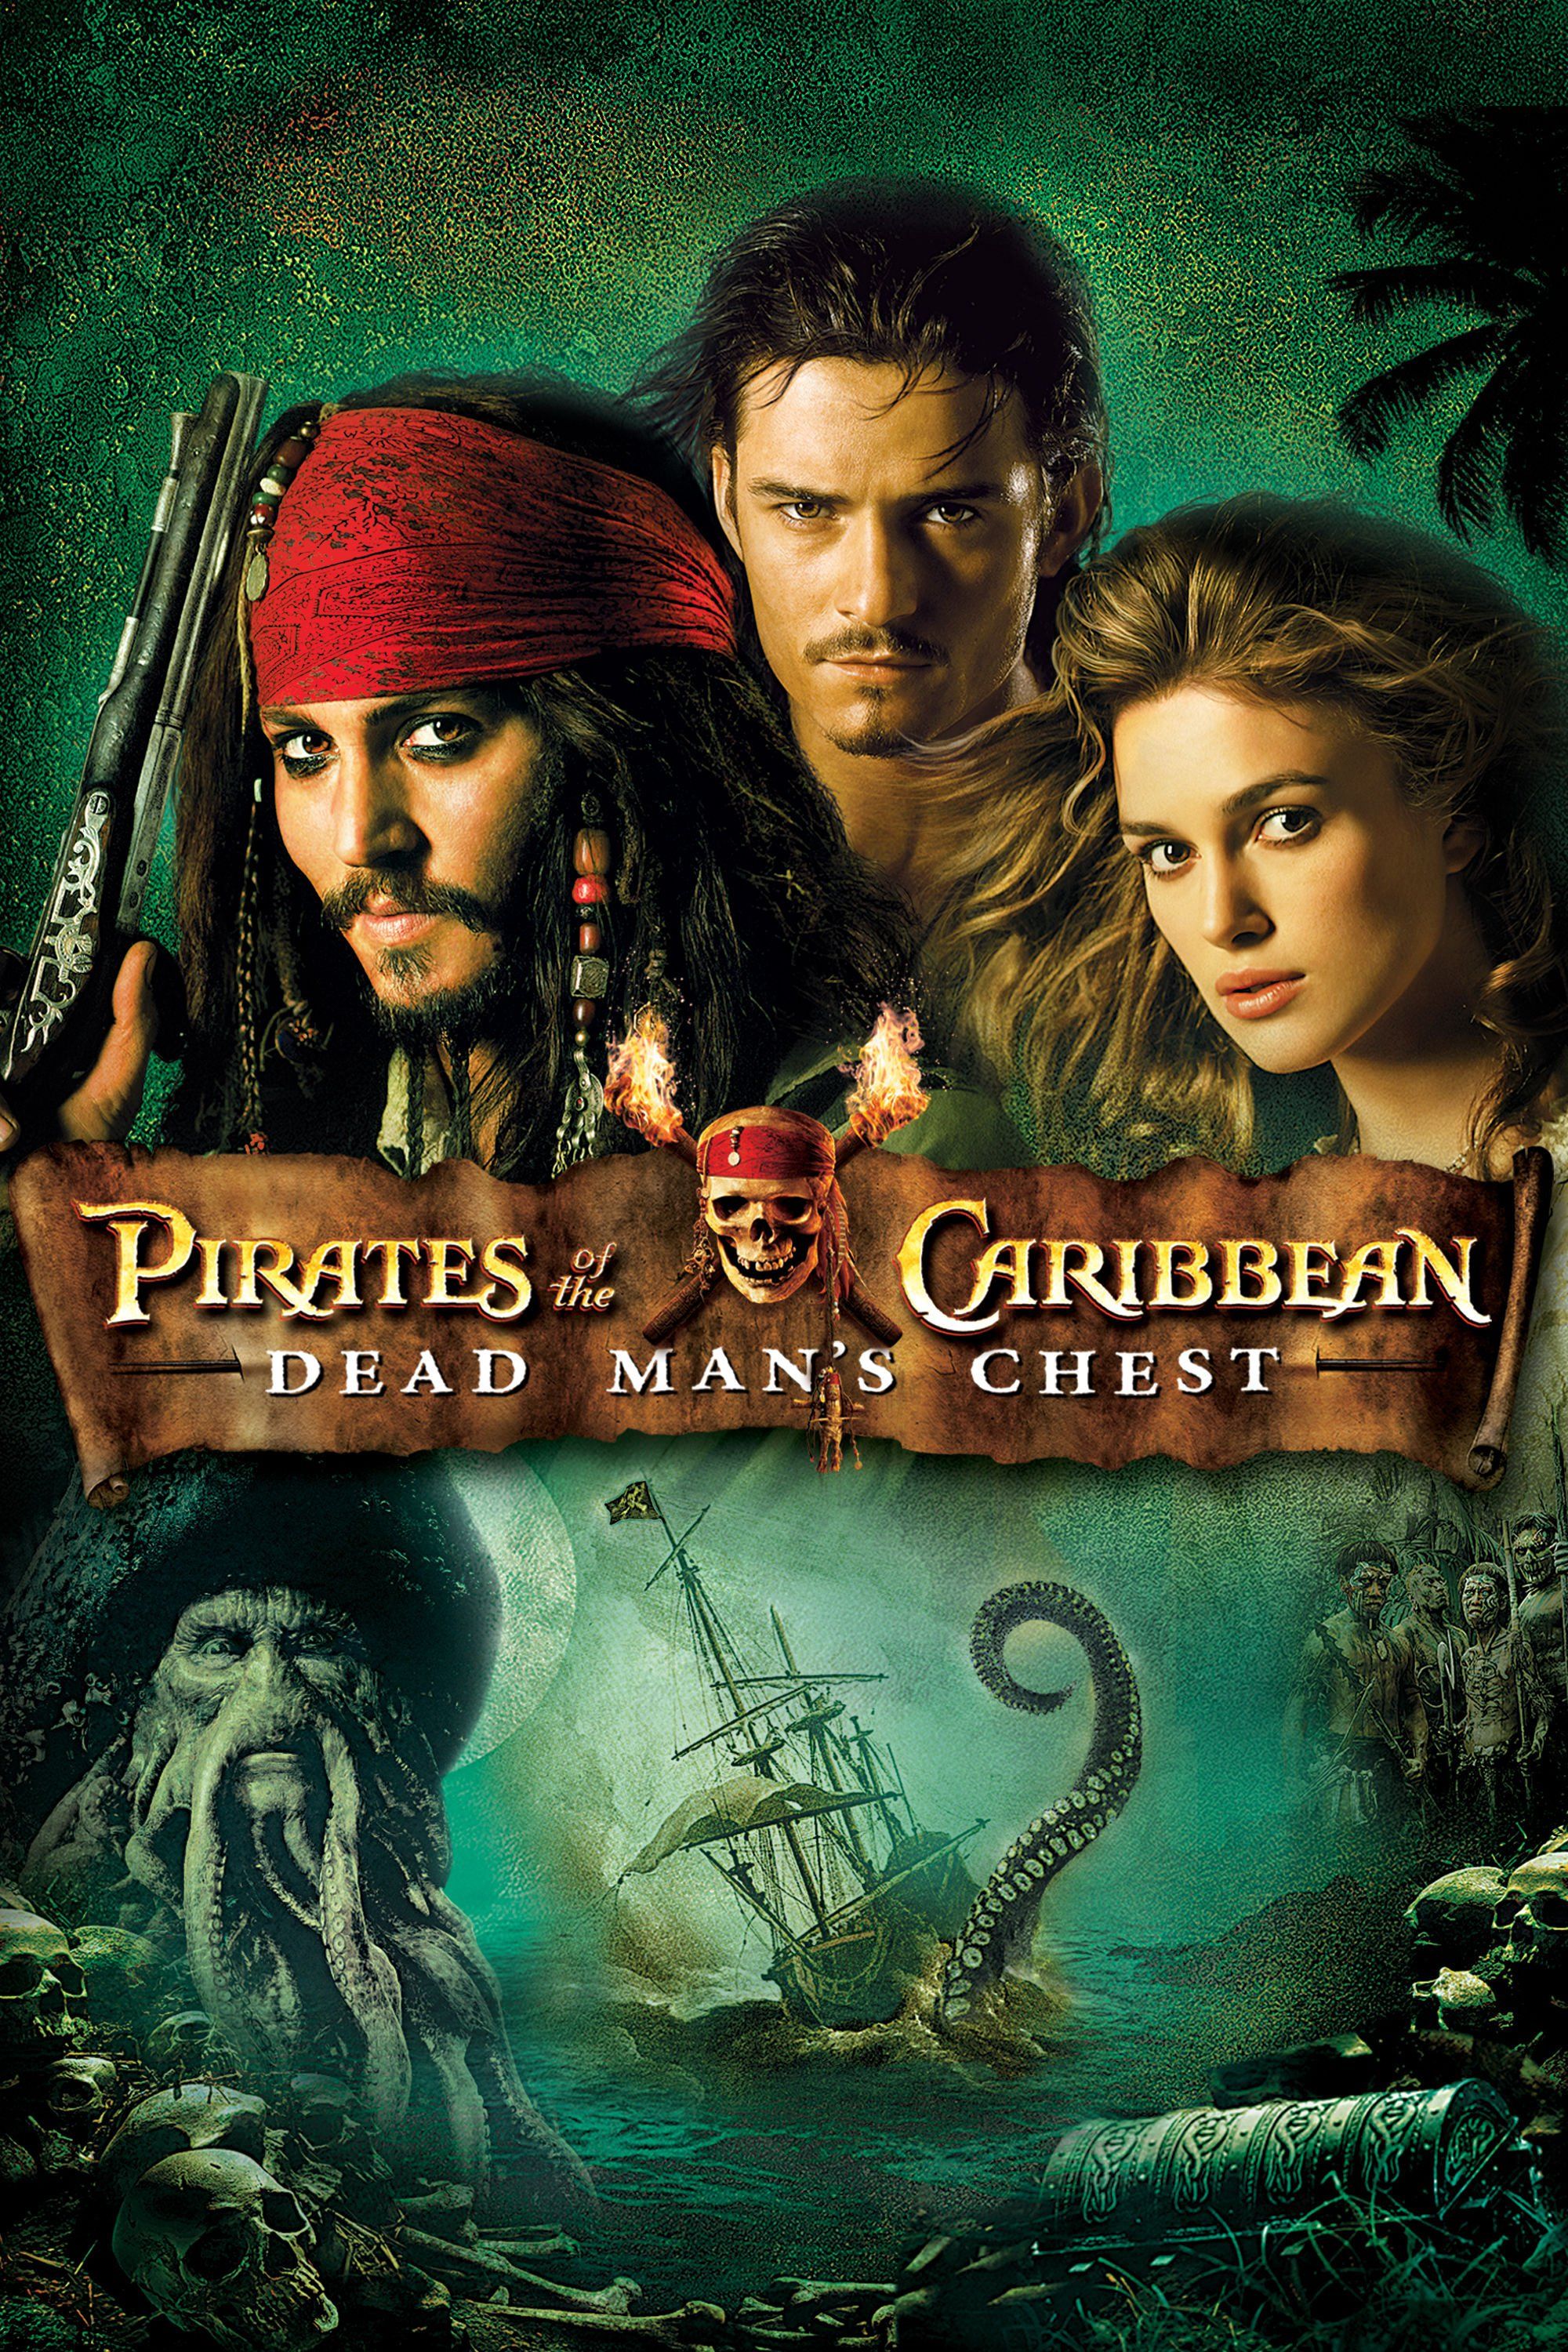 The pirate movie full movie